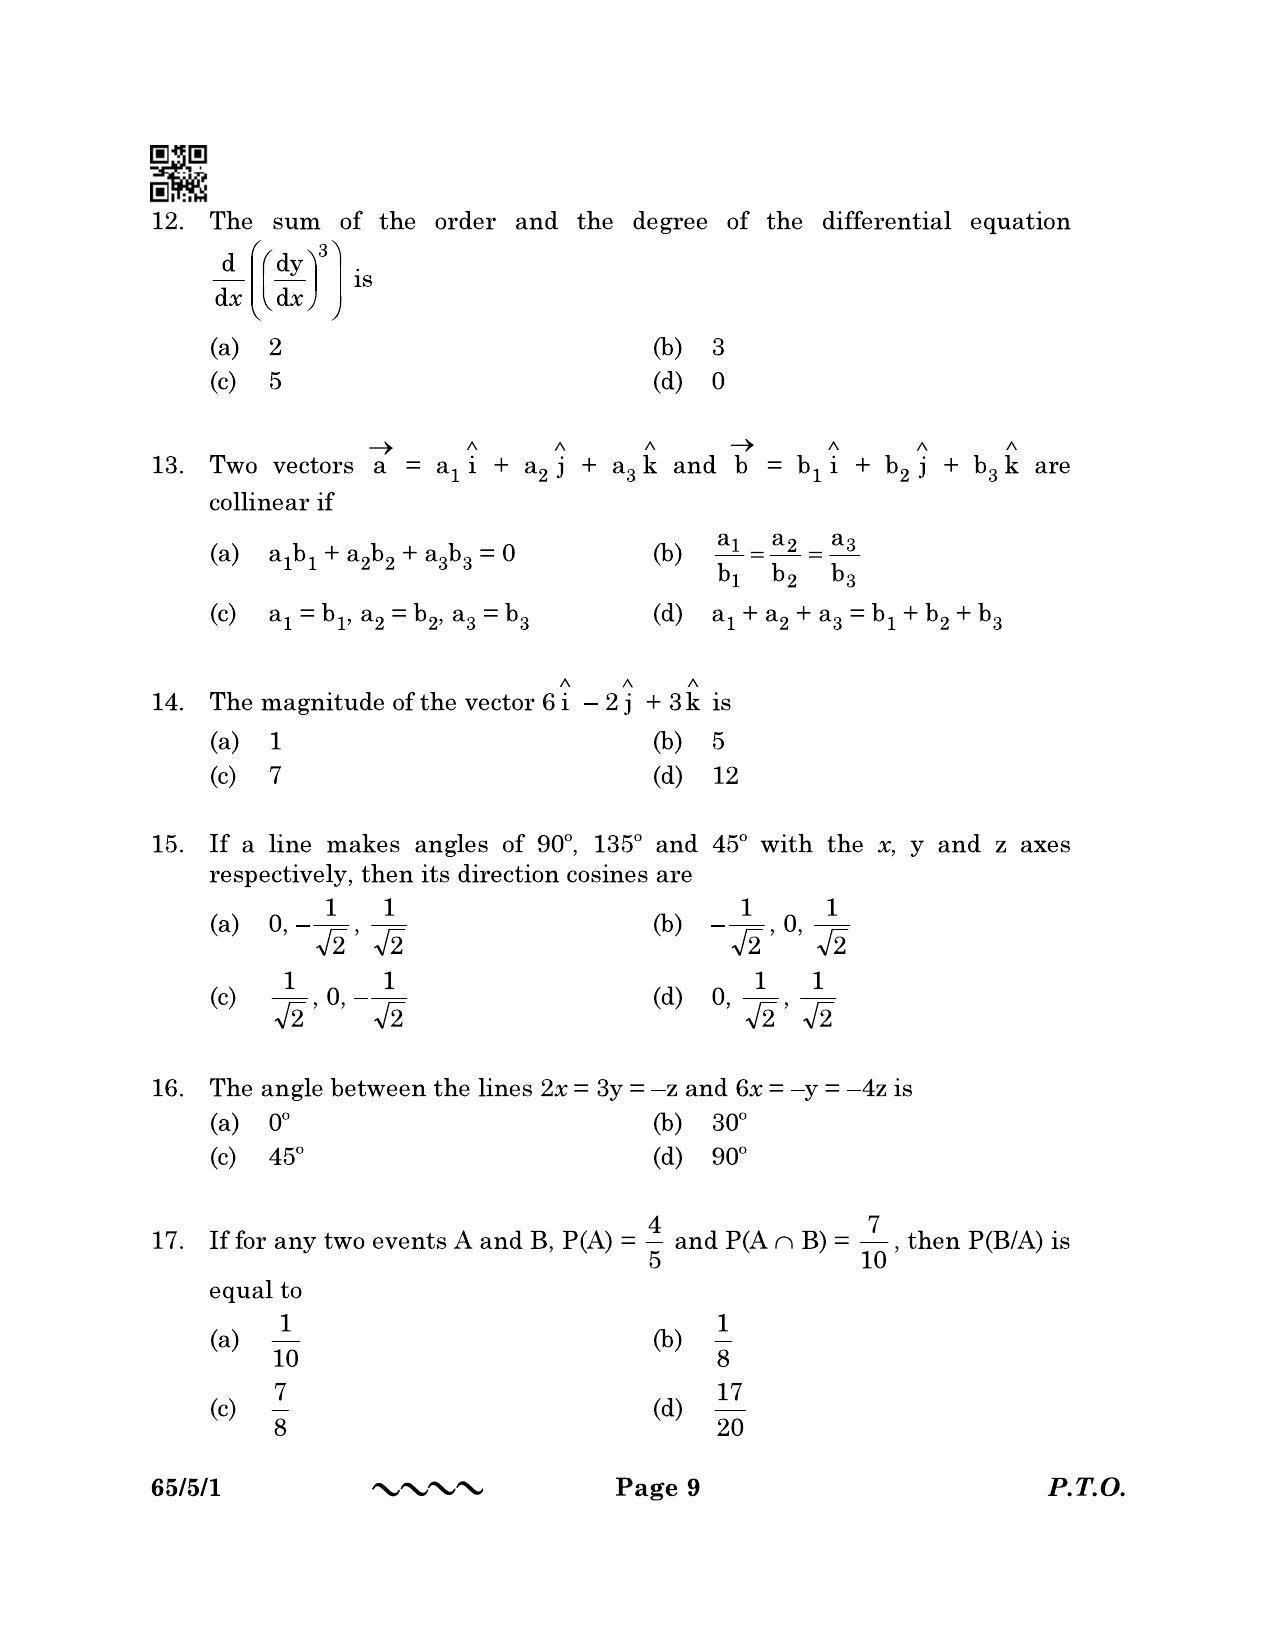 CBSE Class 12 65-5-1 MATHEMATICS 2023 Question Paper - Page 9